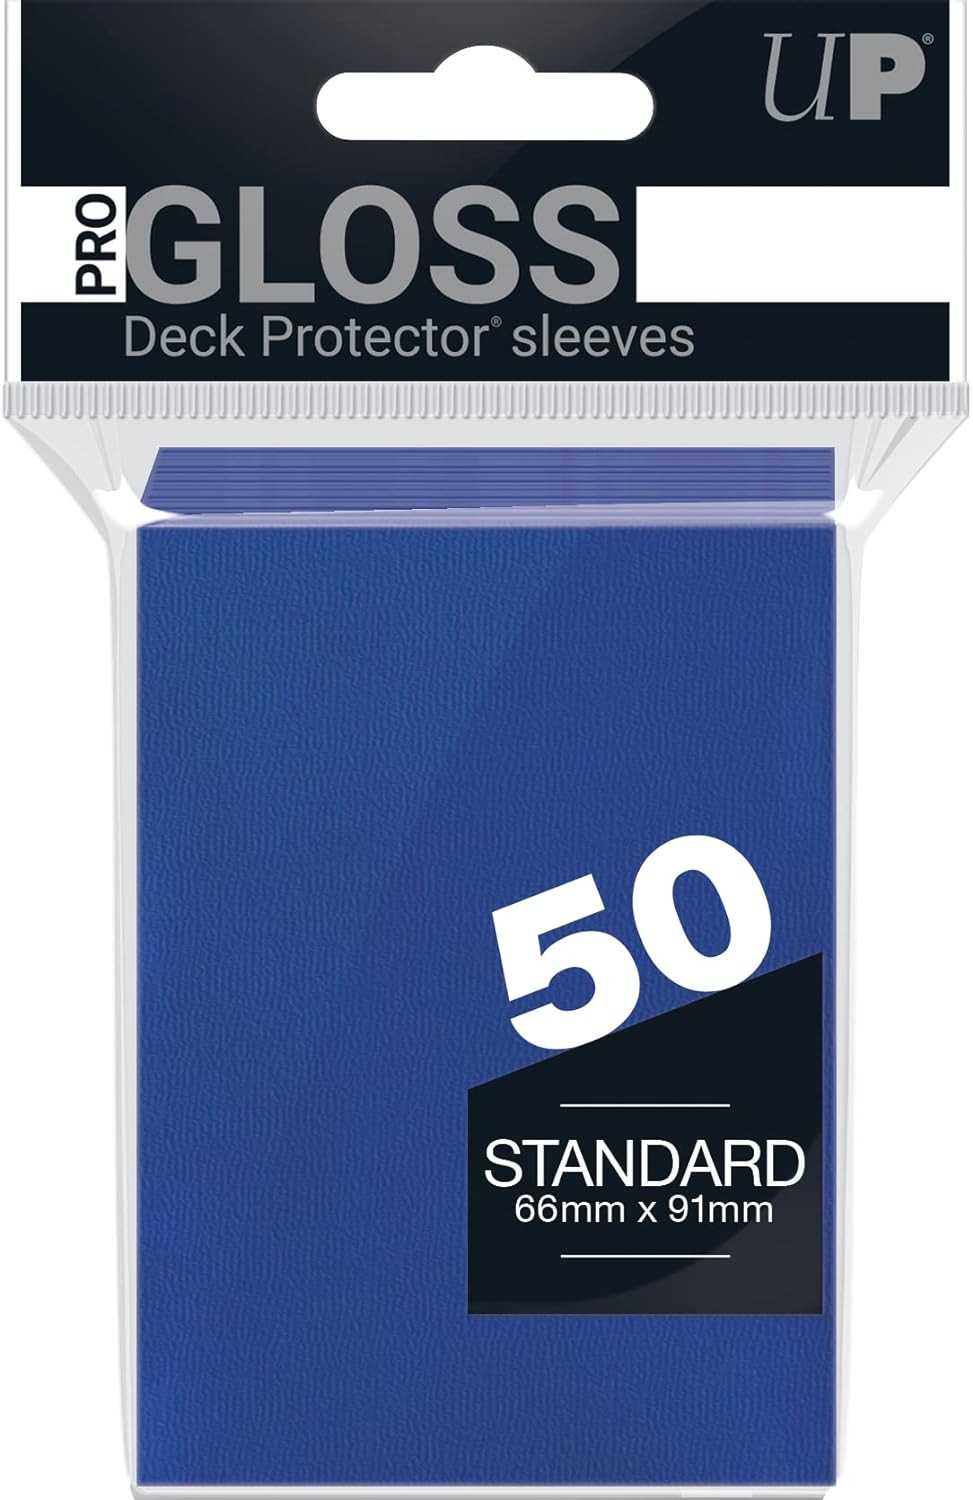 Protège-carte Ultra PRO - 50 pochettes standard - Bleu - Cartes